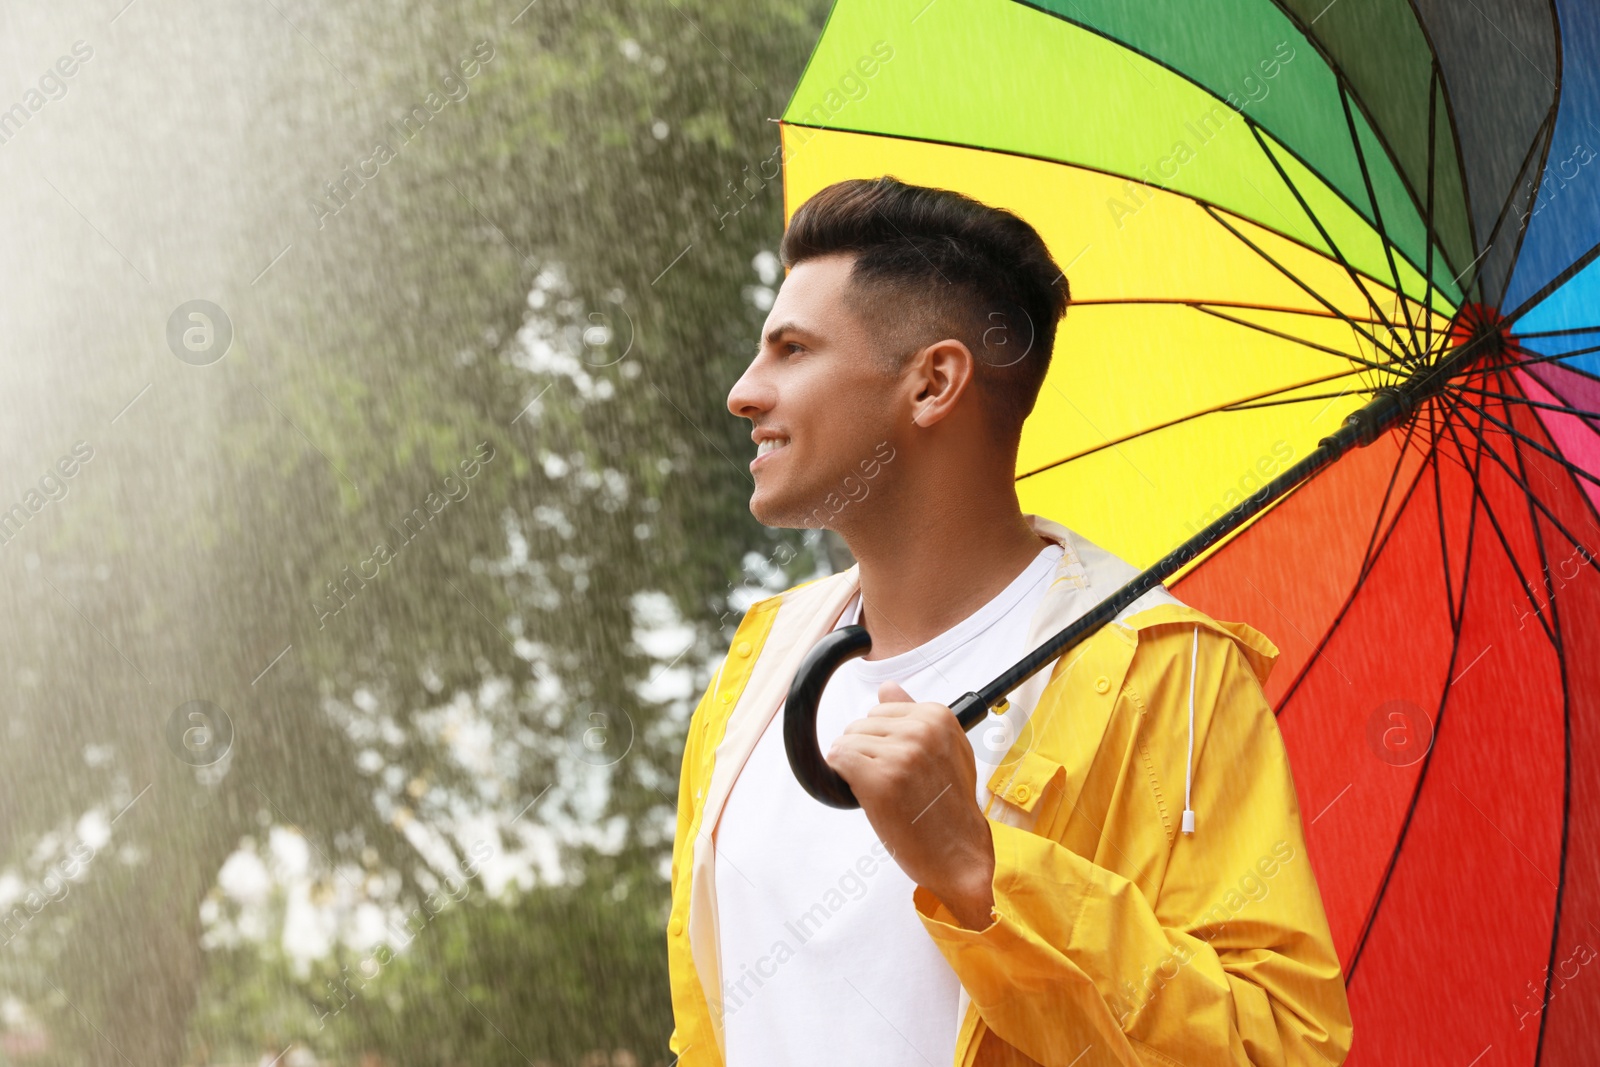 Photo of Man with umbrella walking under rain in park